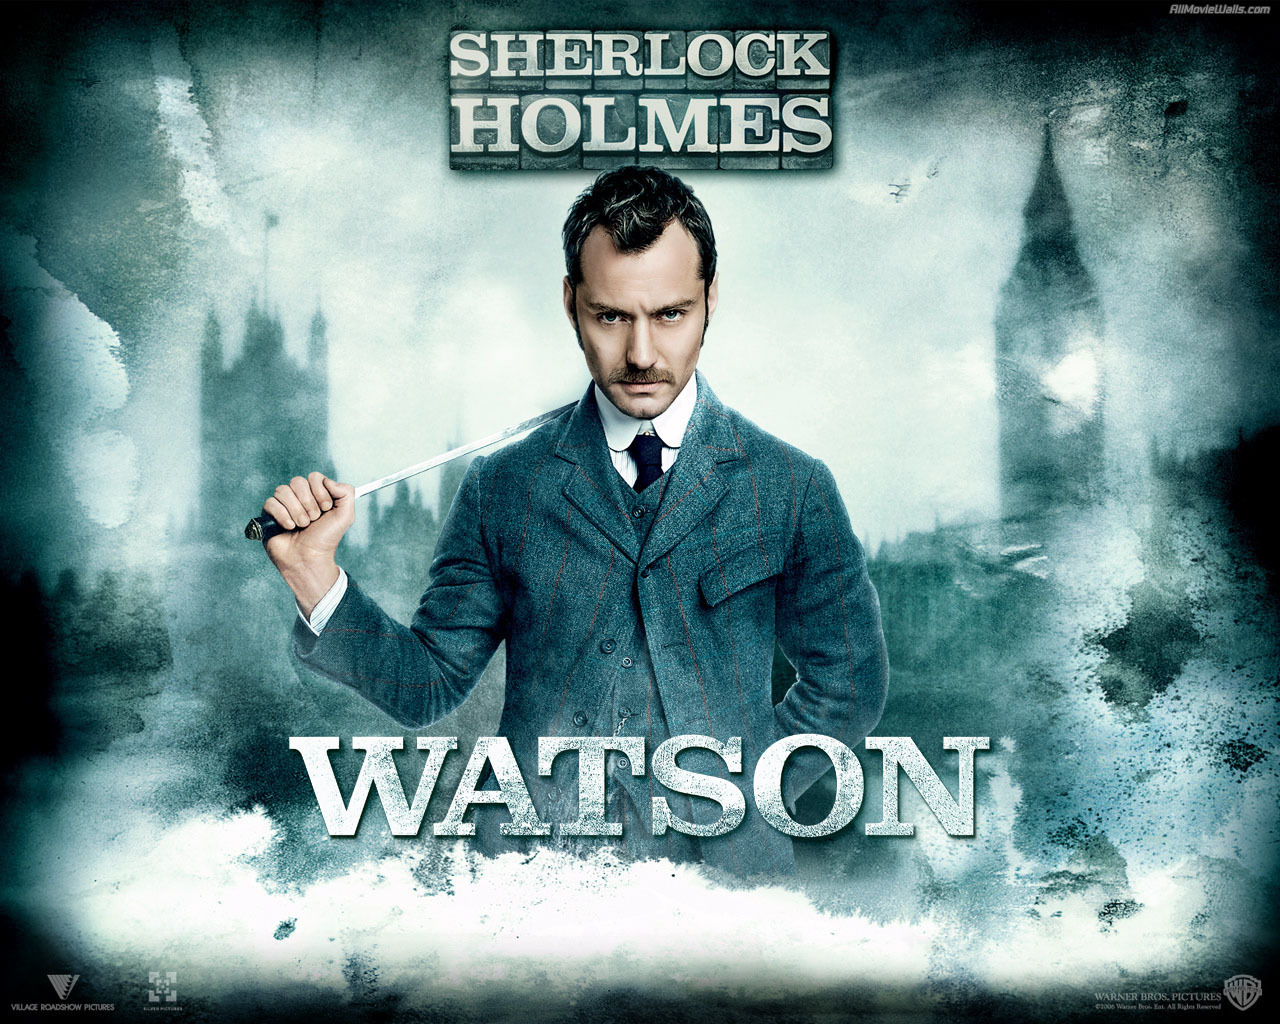 Sherlock Holmes in Washington movies in Europe